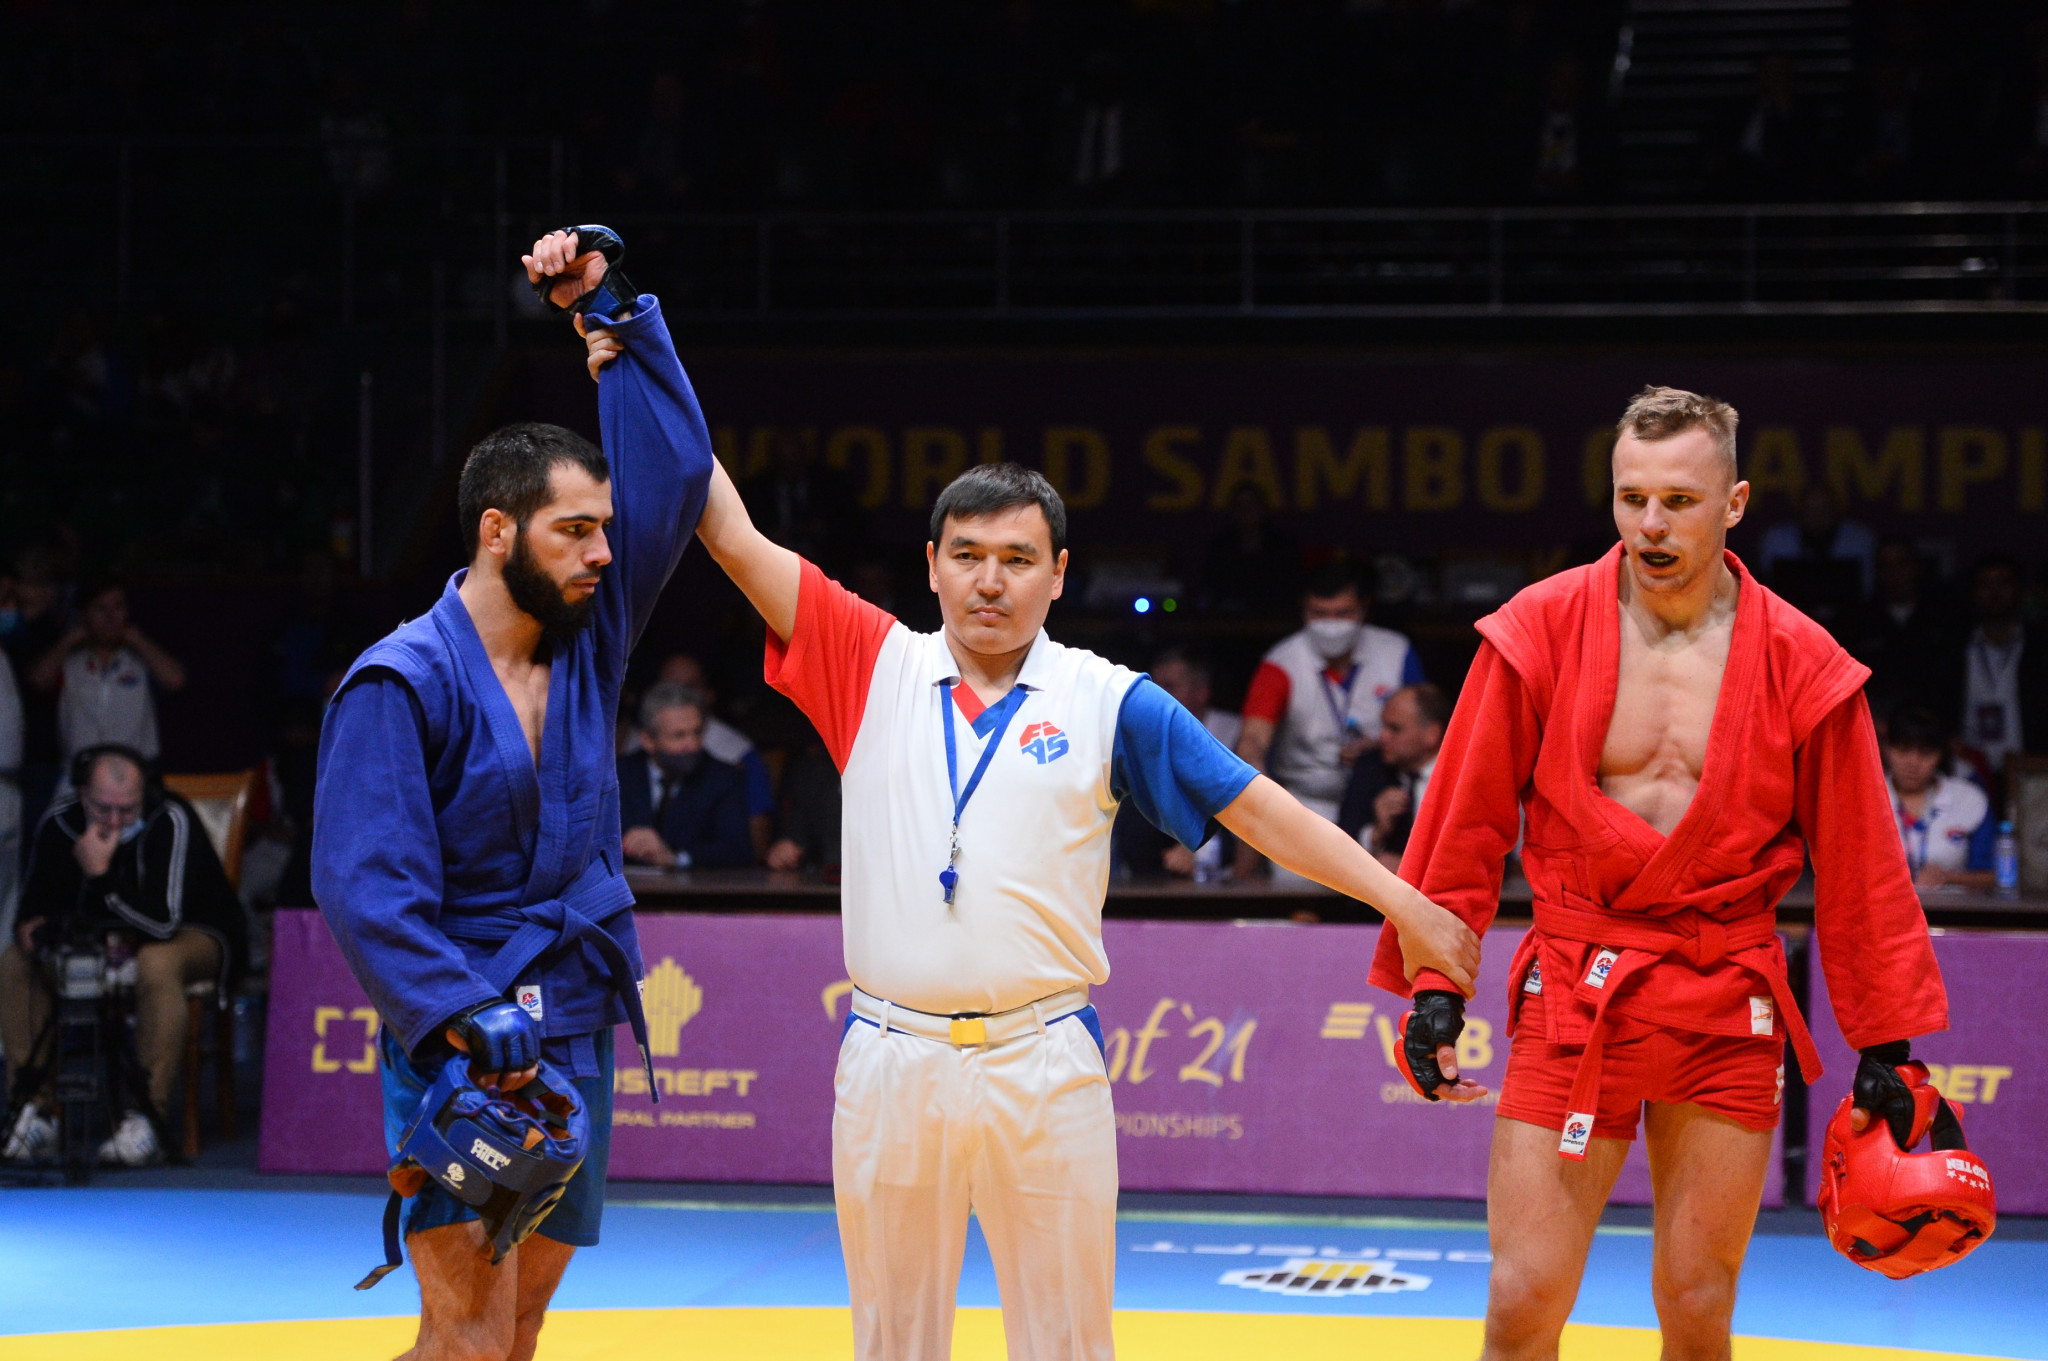 Ruslan Gasankhanov is awarded the combat under-71kg gold after seeing off Zygimantas Ramaska ©FIAS